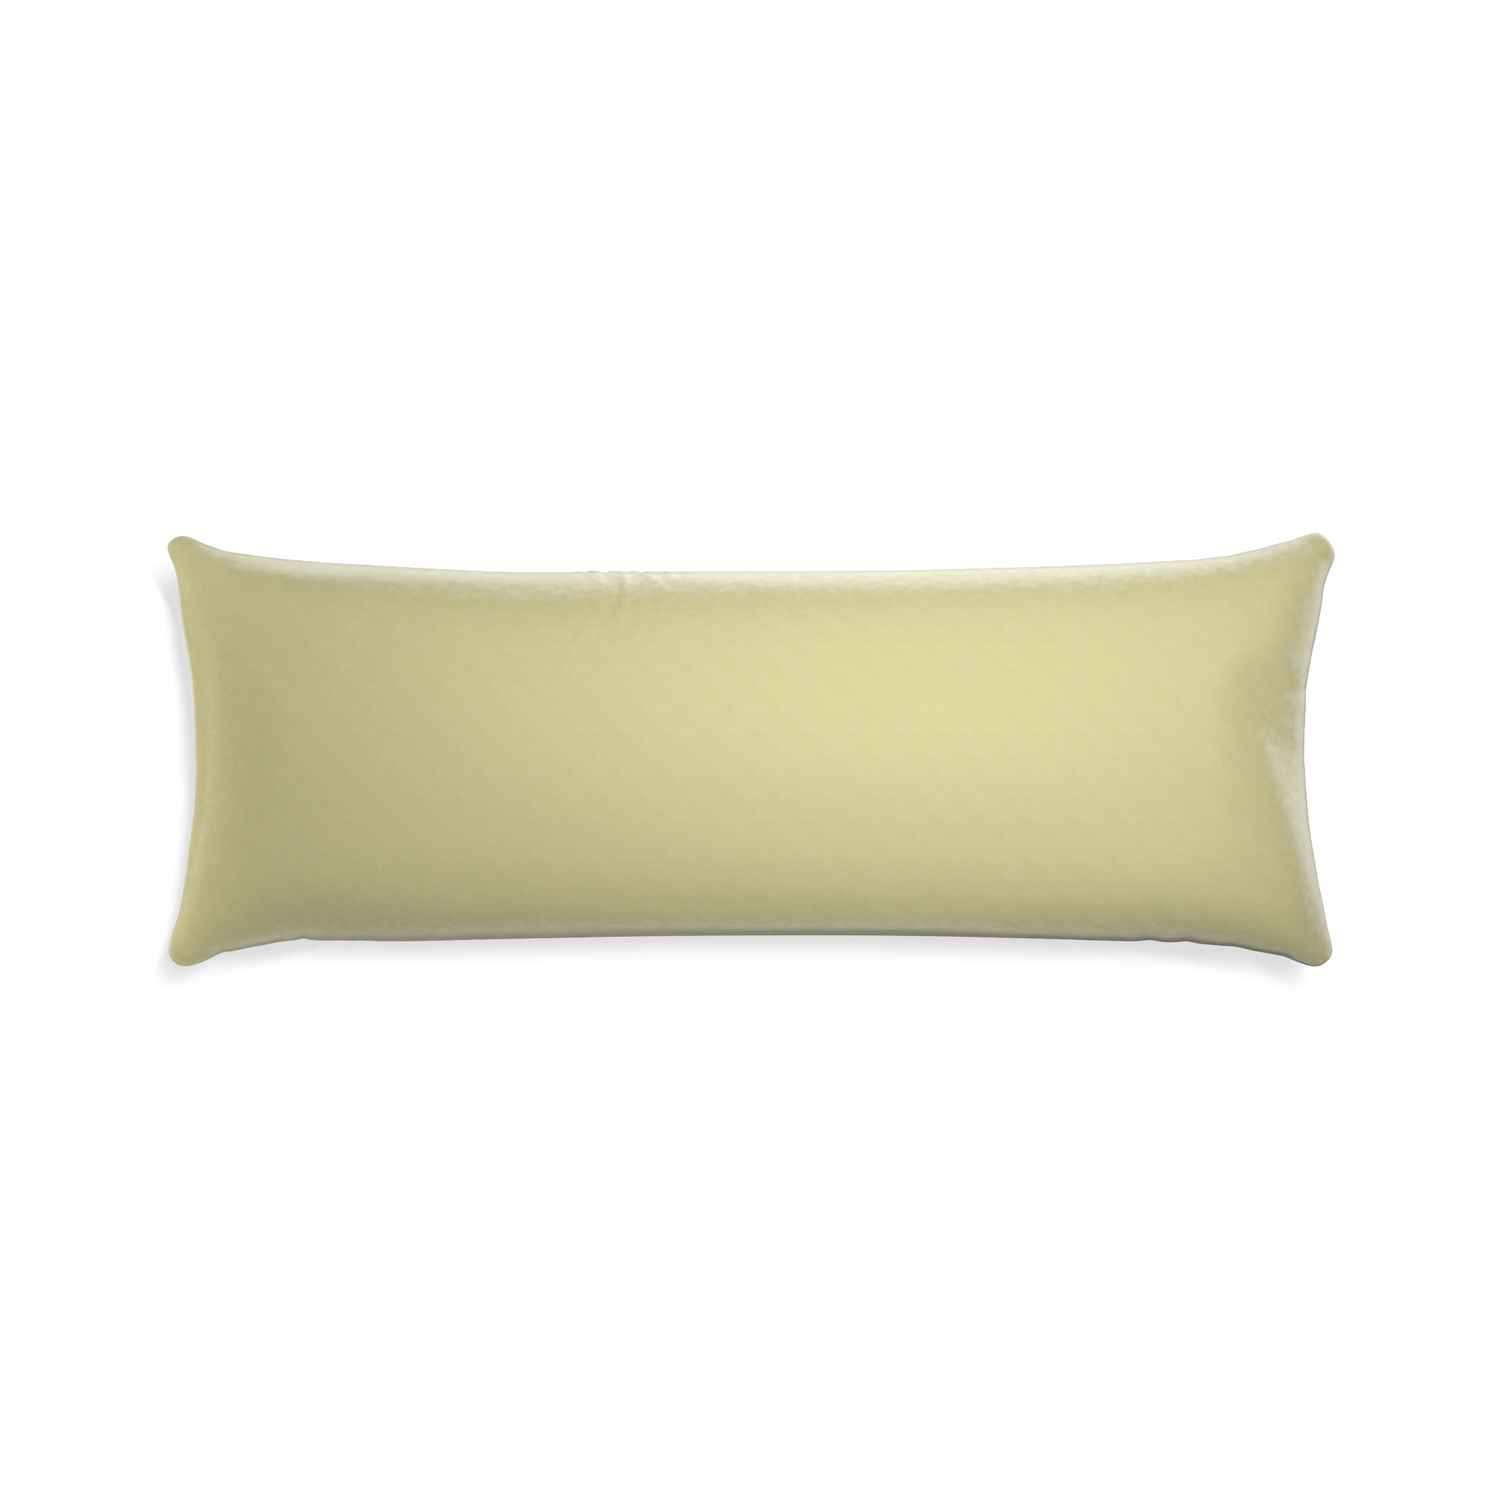 Xl-lumbar pear velvet custom pillow with none on white background